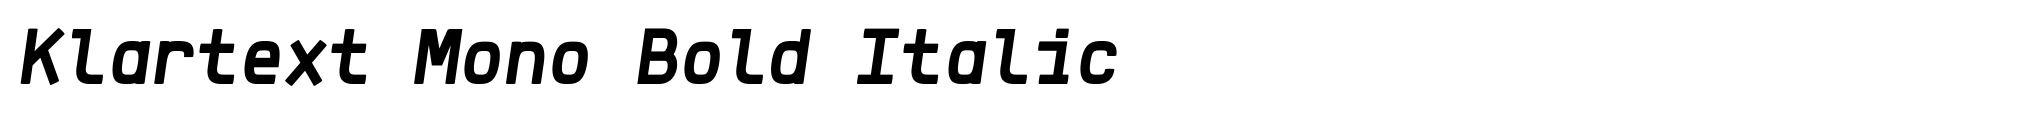 Klartext Mono Bold Italic image